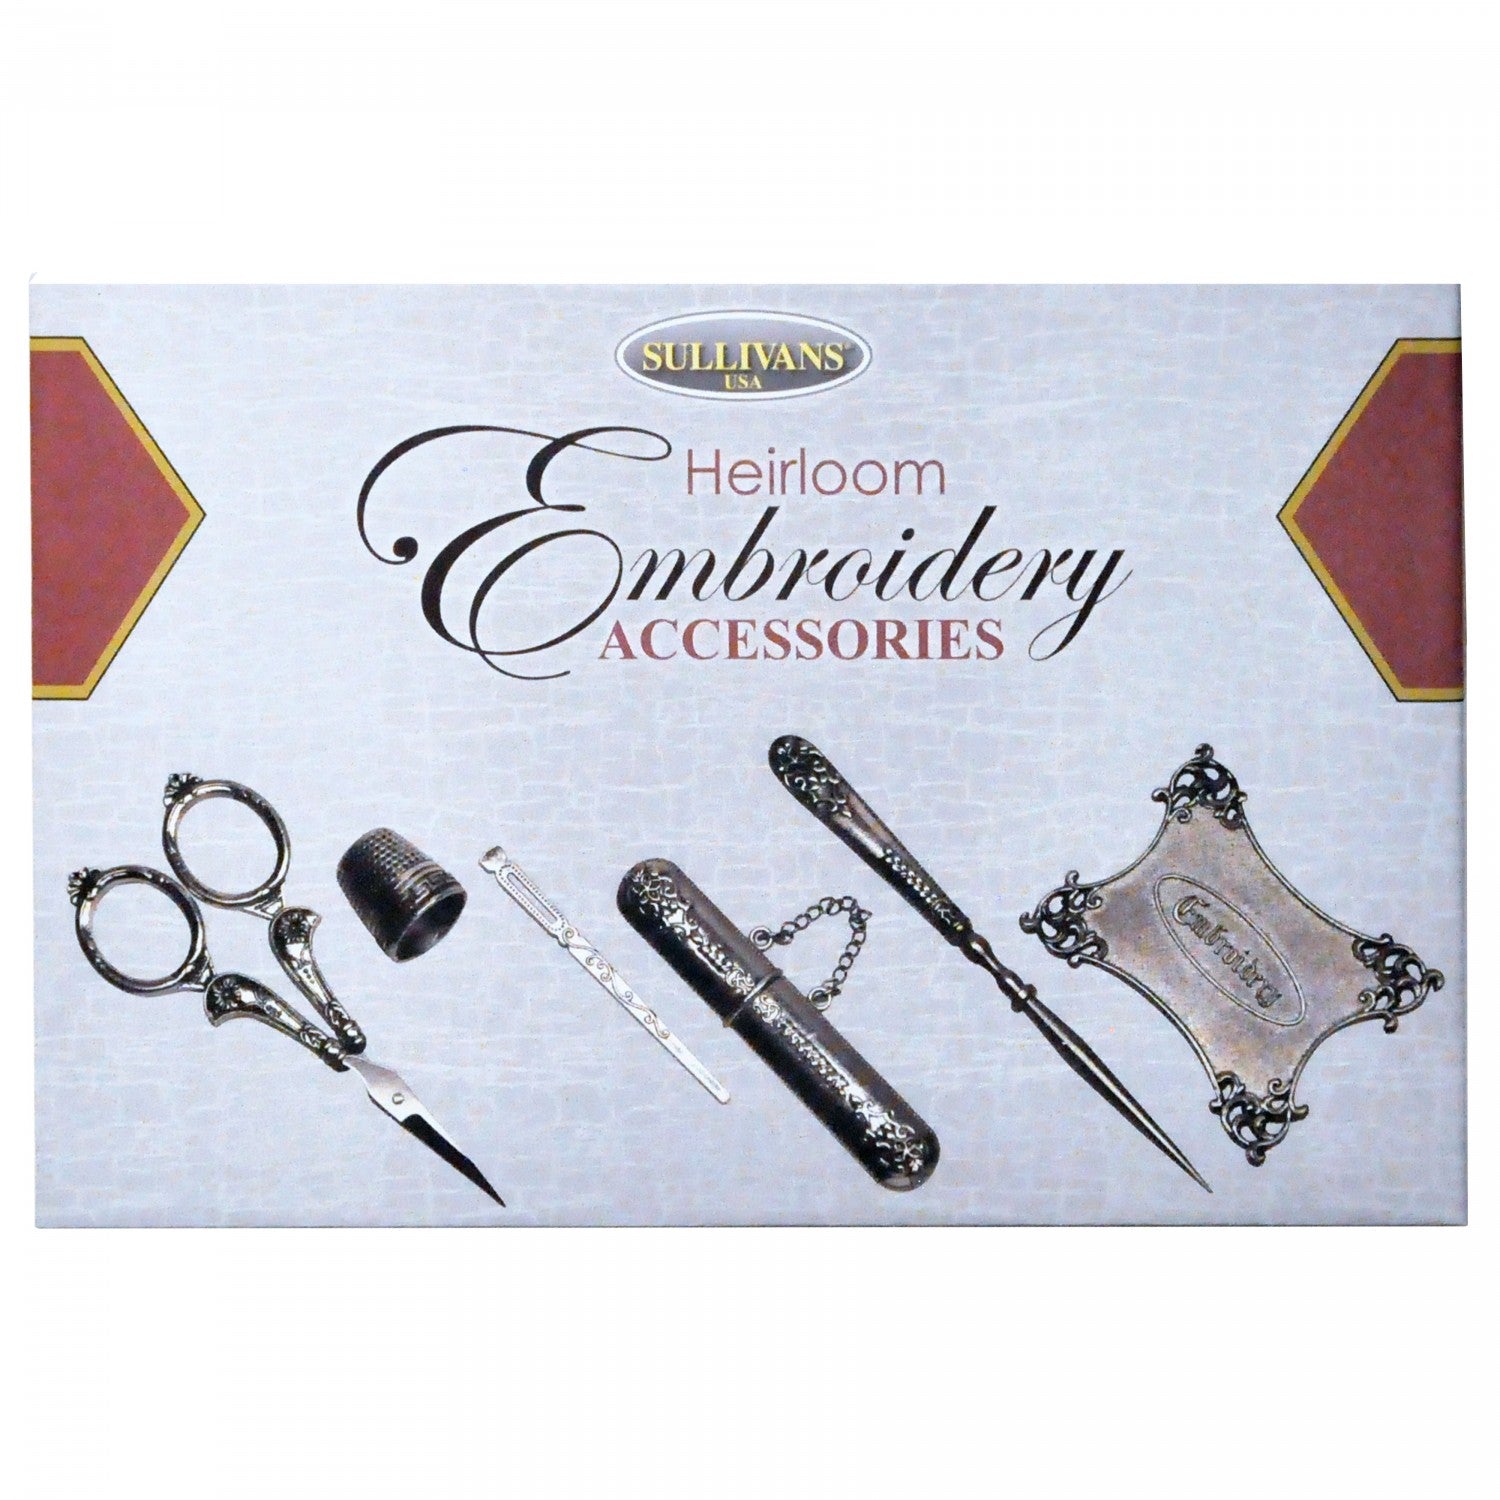 Sullivans Heirloom Embroidery Accessories Box